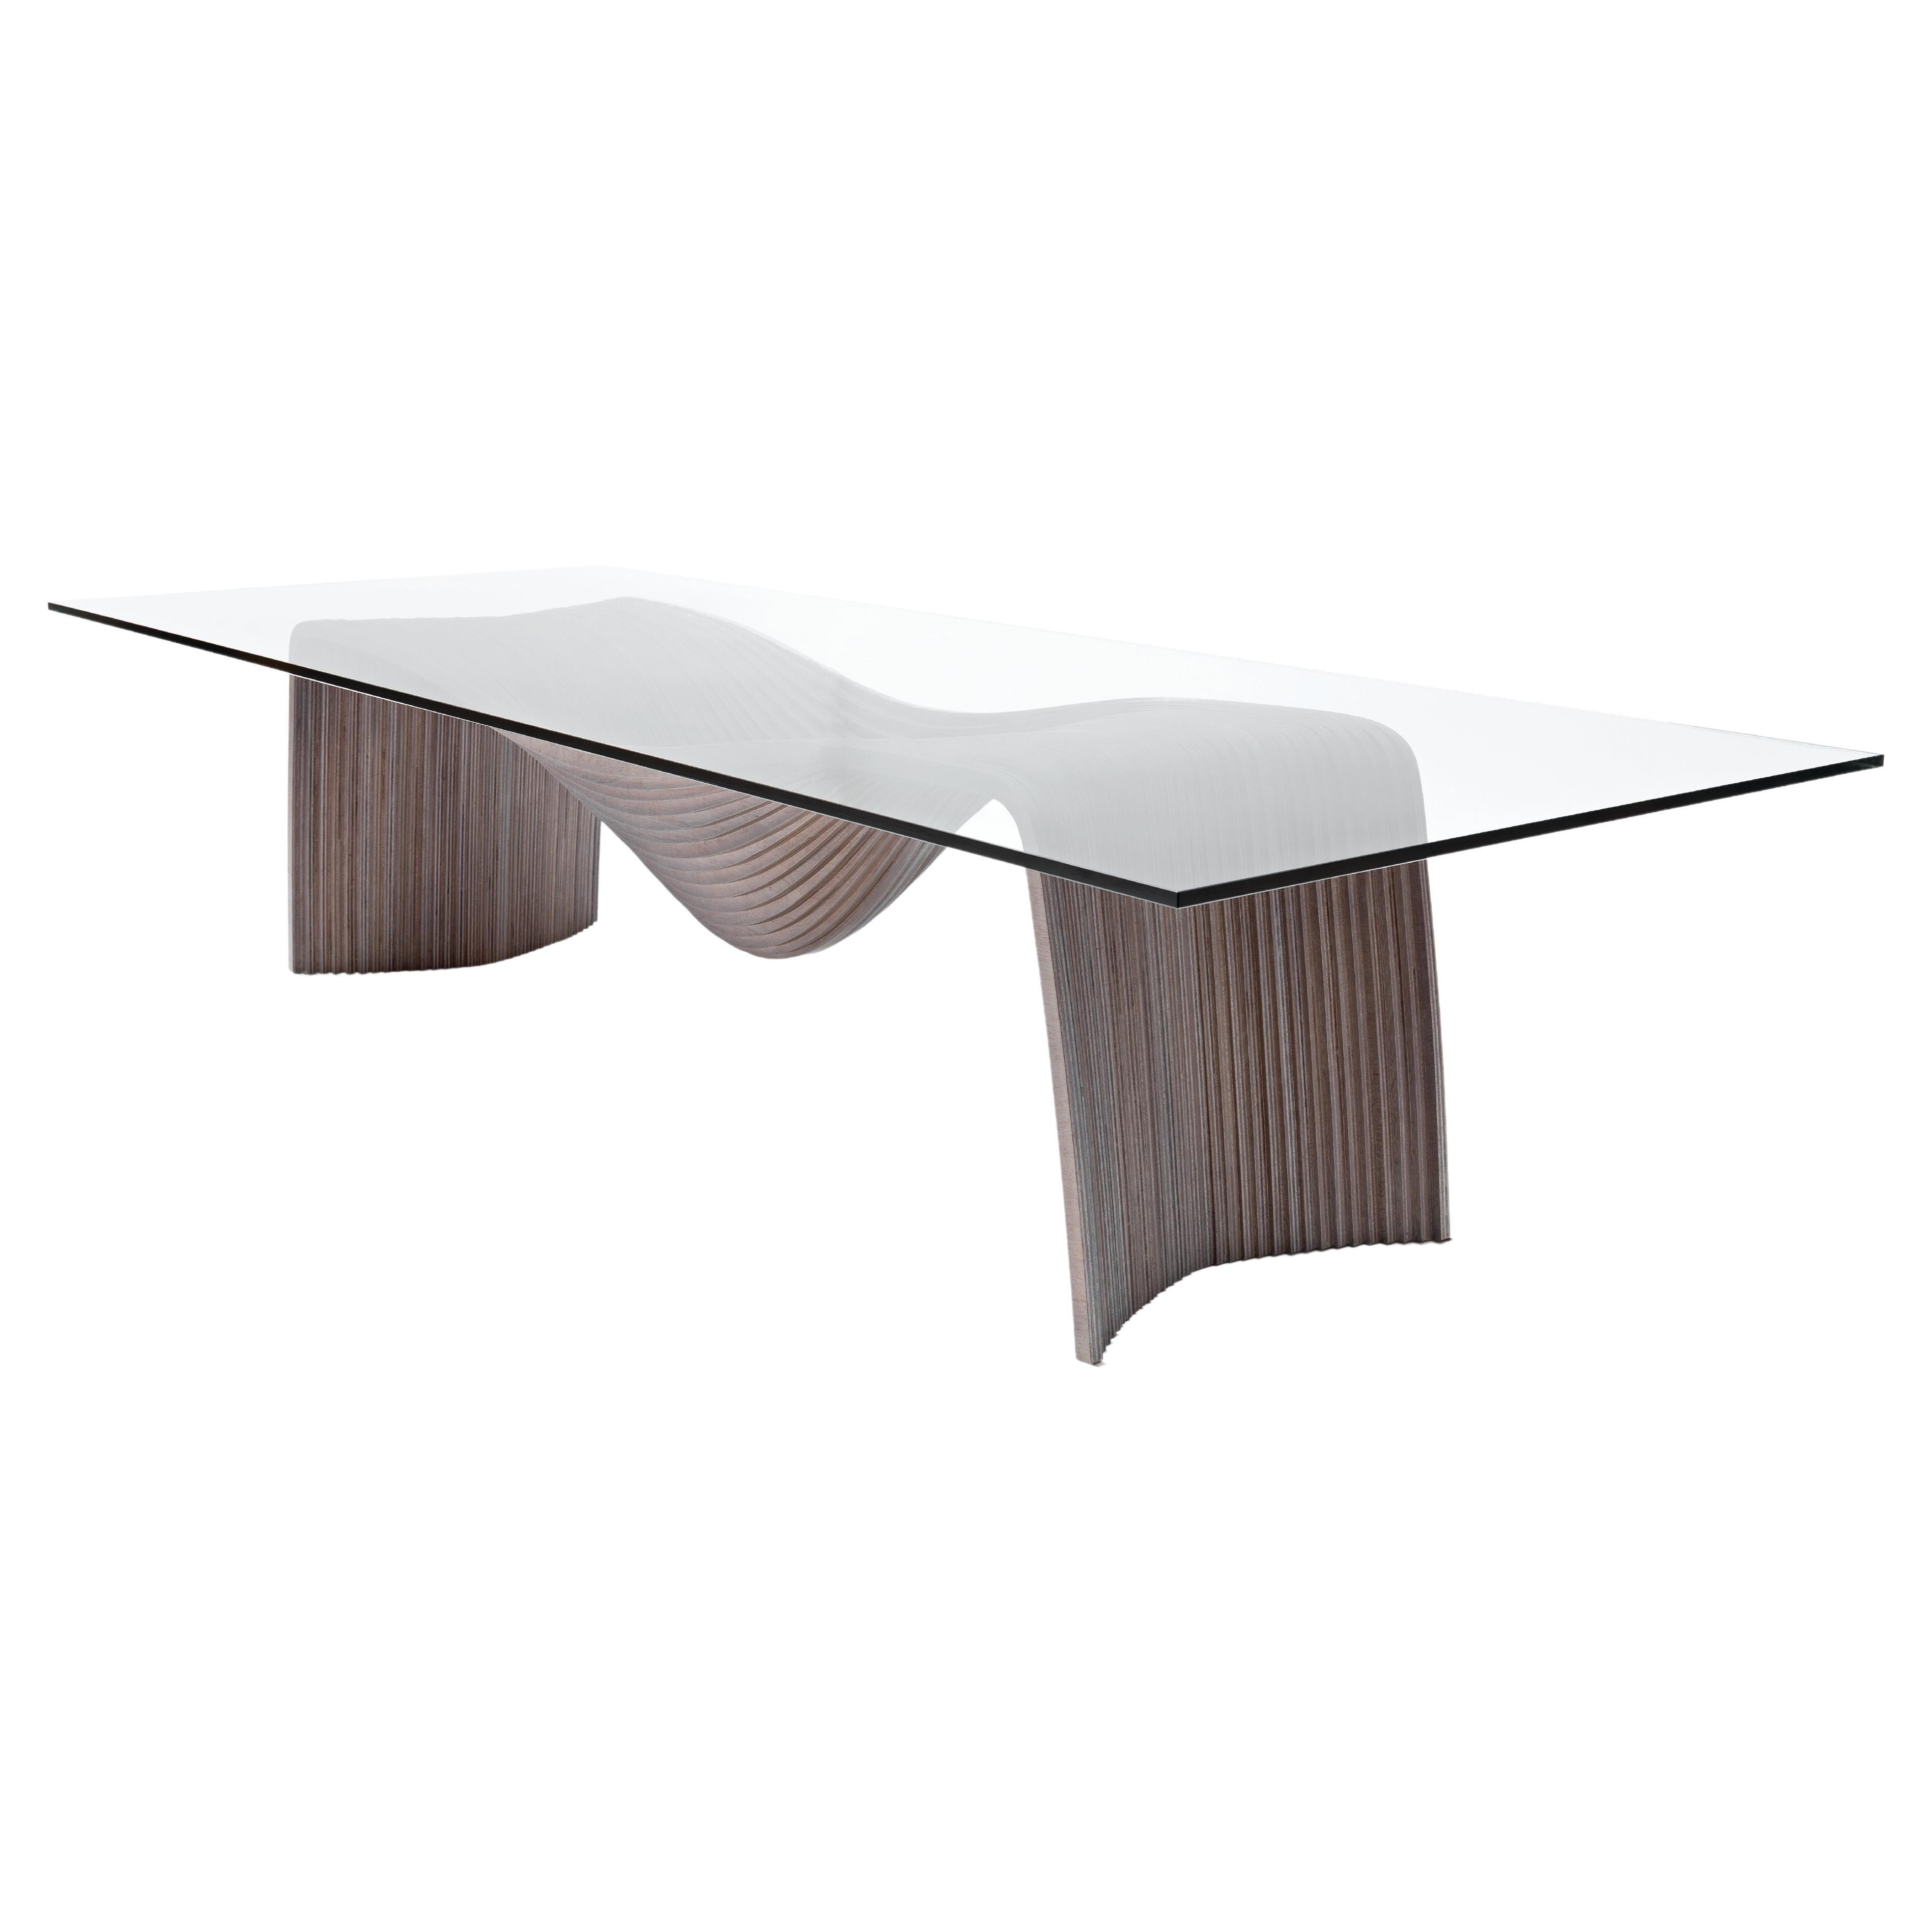 Corozo Table by Piegatto, a Sculptural Contemporary Table For Sale